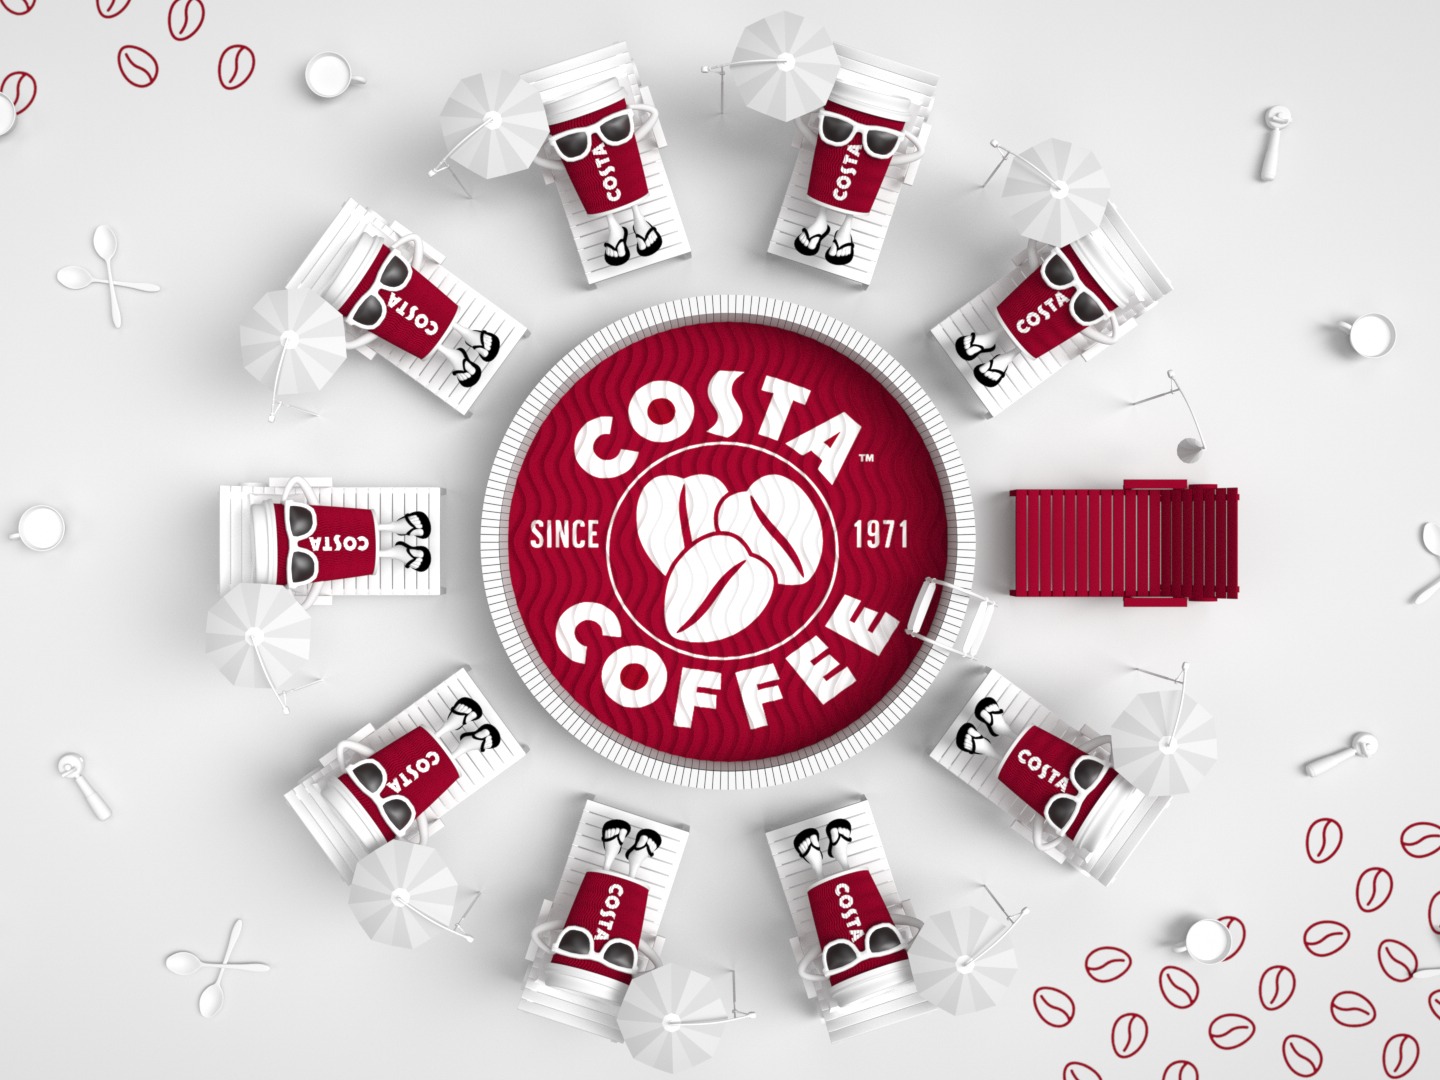  Costa |礼遇卡&海报